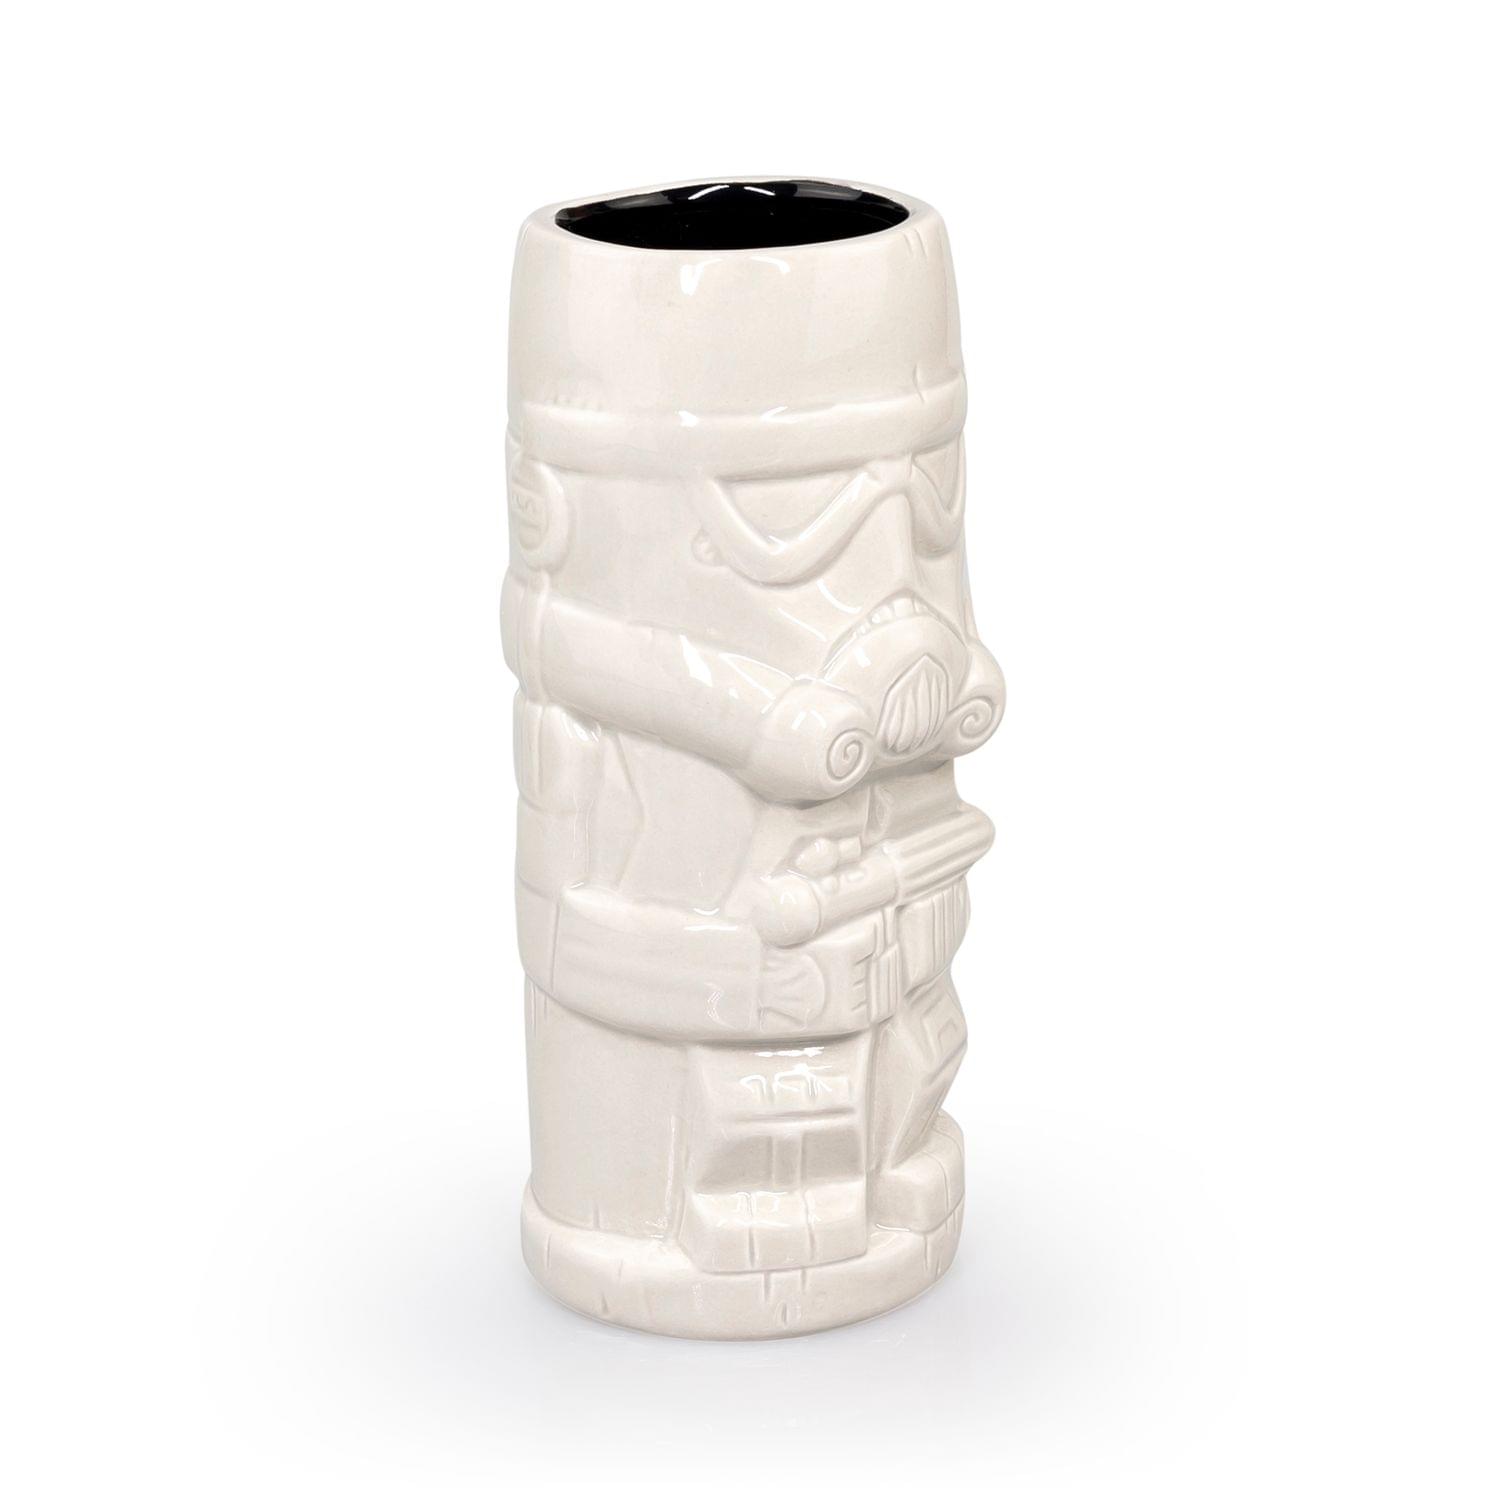 Geeki Tikis Star Wars Stormtrooper Mug | Crafted Ceramic | Holds 14 Ounces